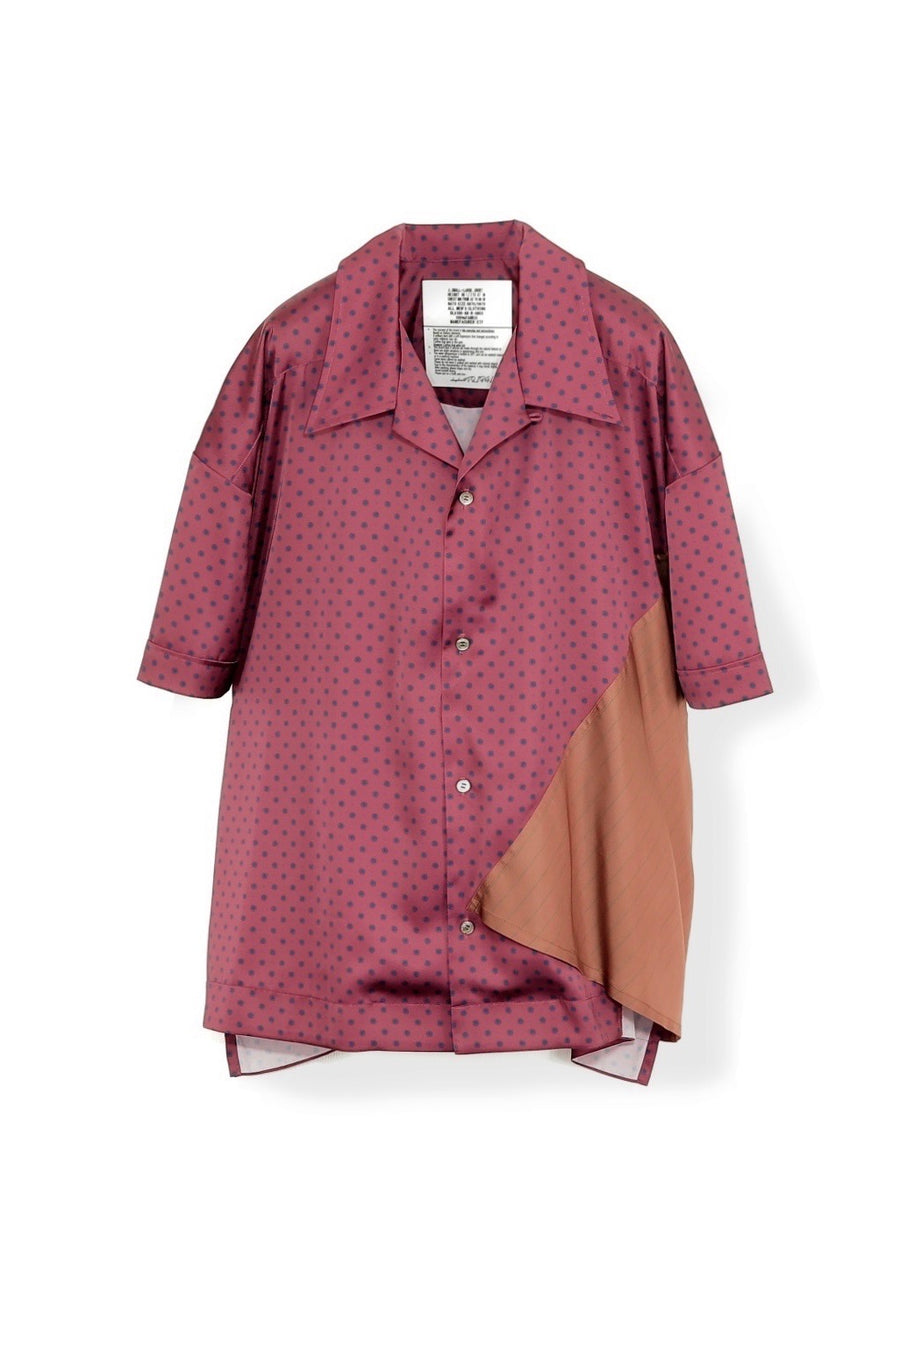 elephant TRIBAL fabrics  Out of alignment Resort shirt(BORDEAUX)